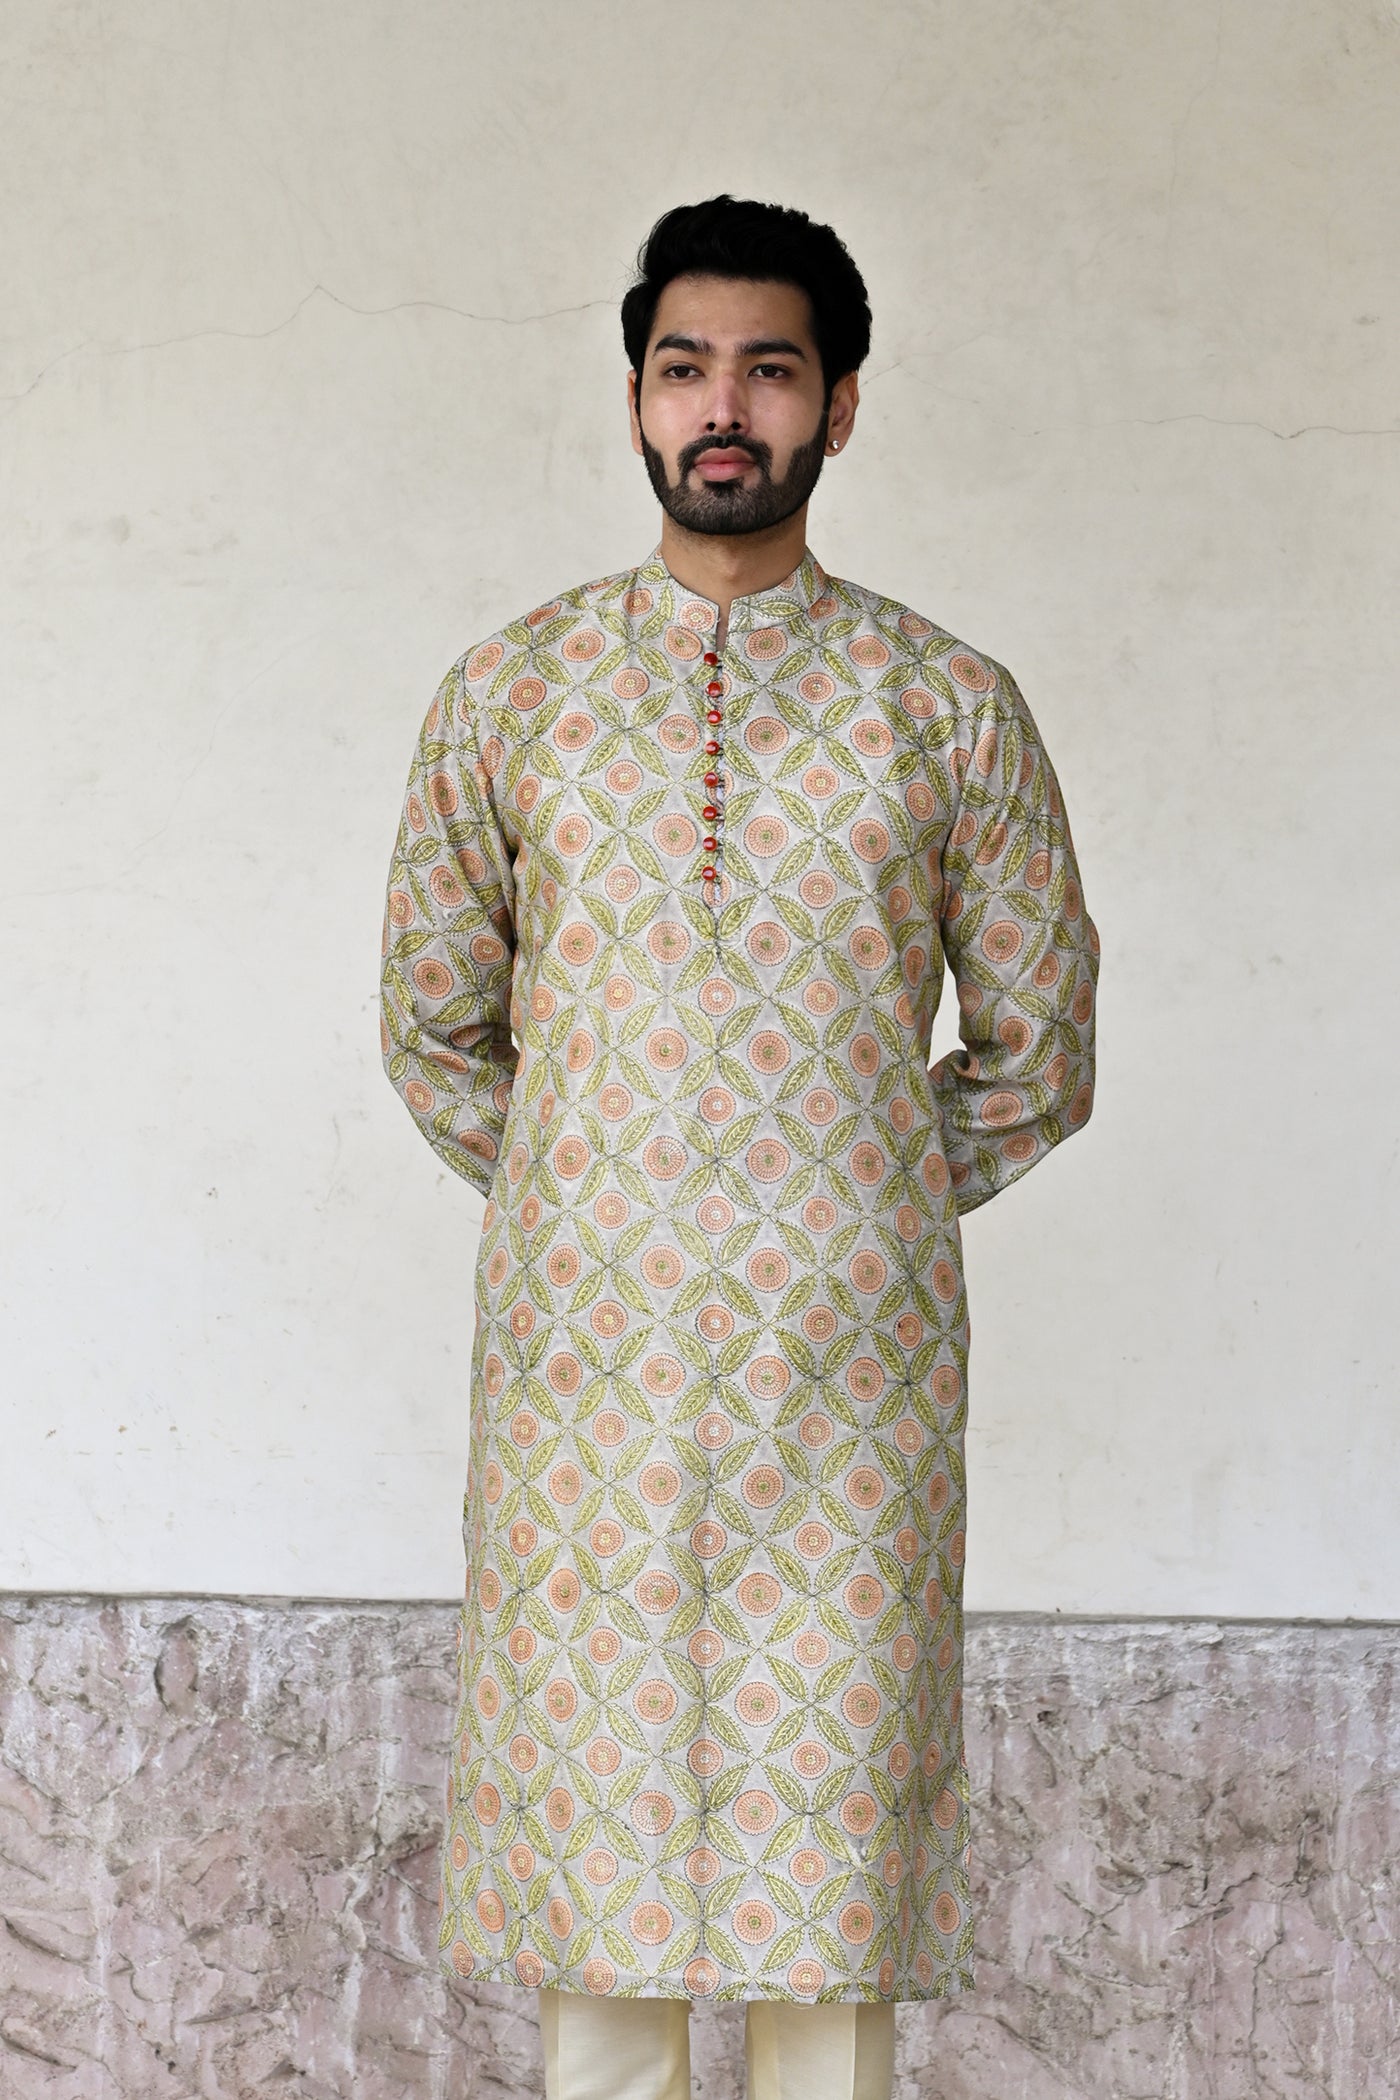 Grey kurta with geometric pattern in Chanderi silk for groom's wedding attire